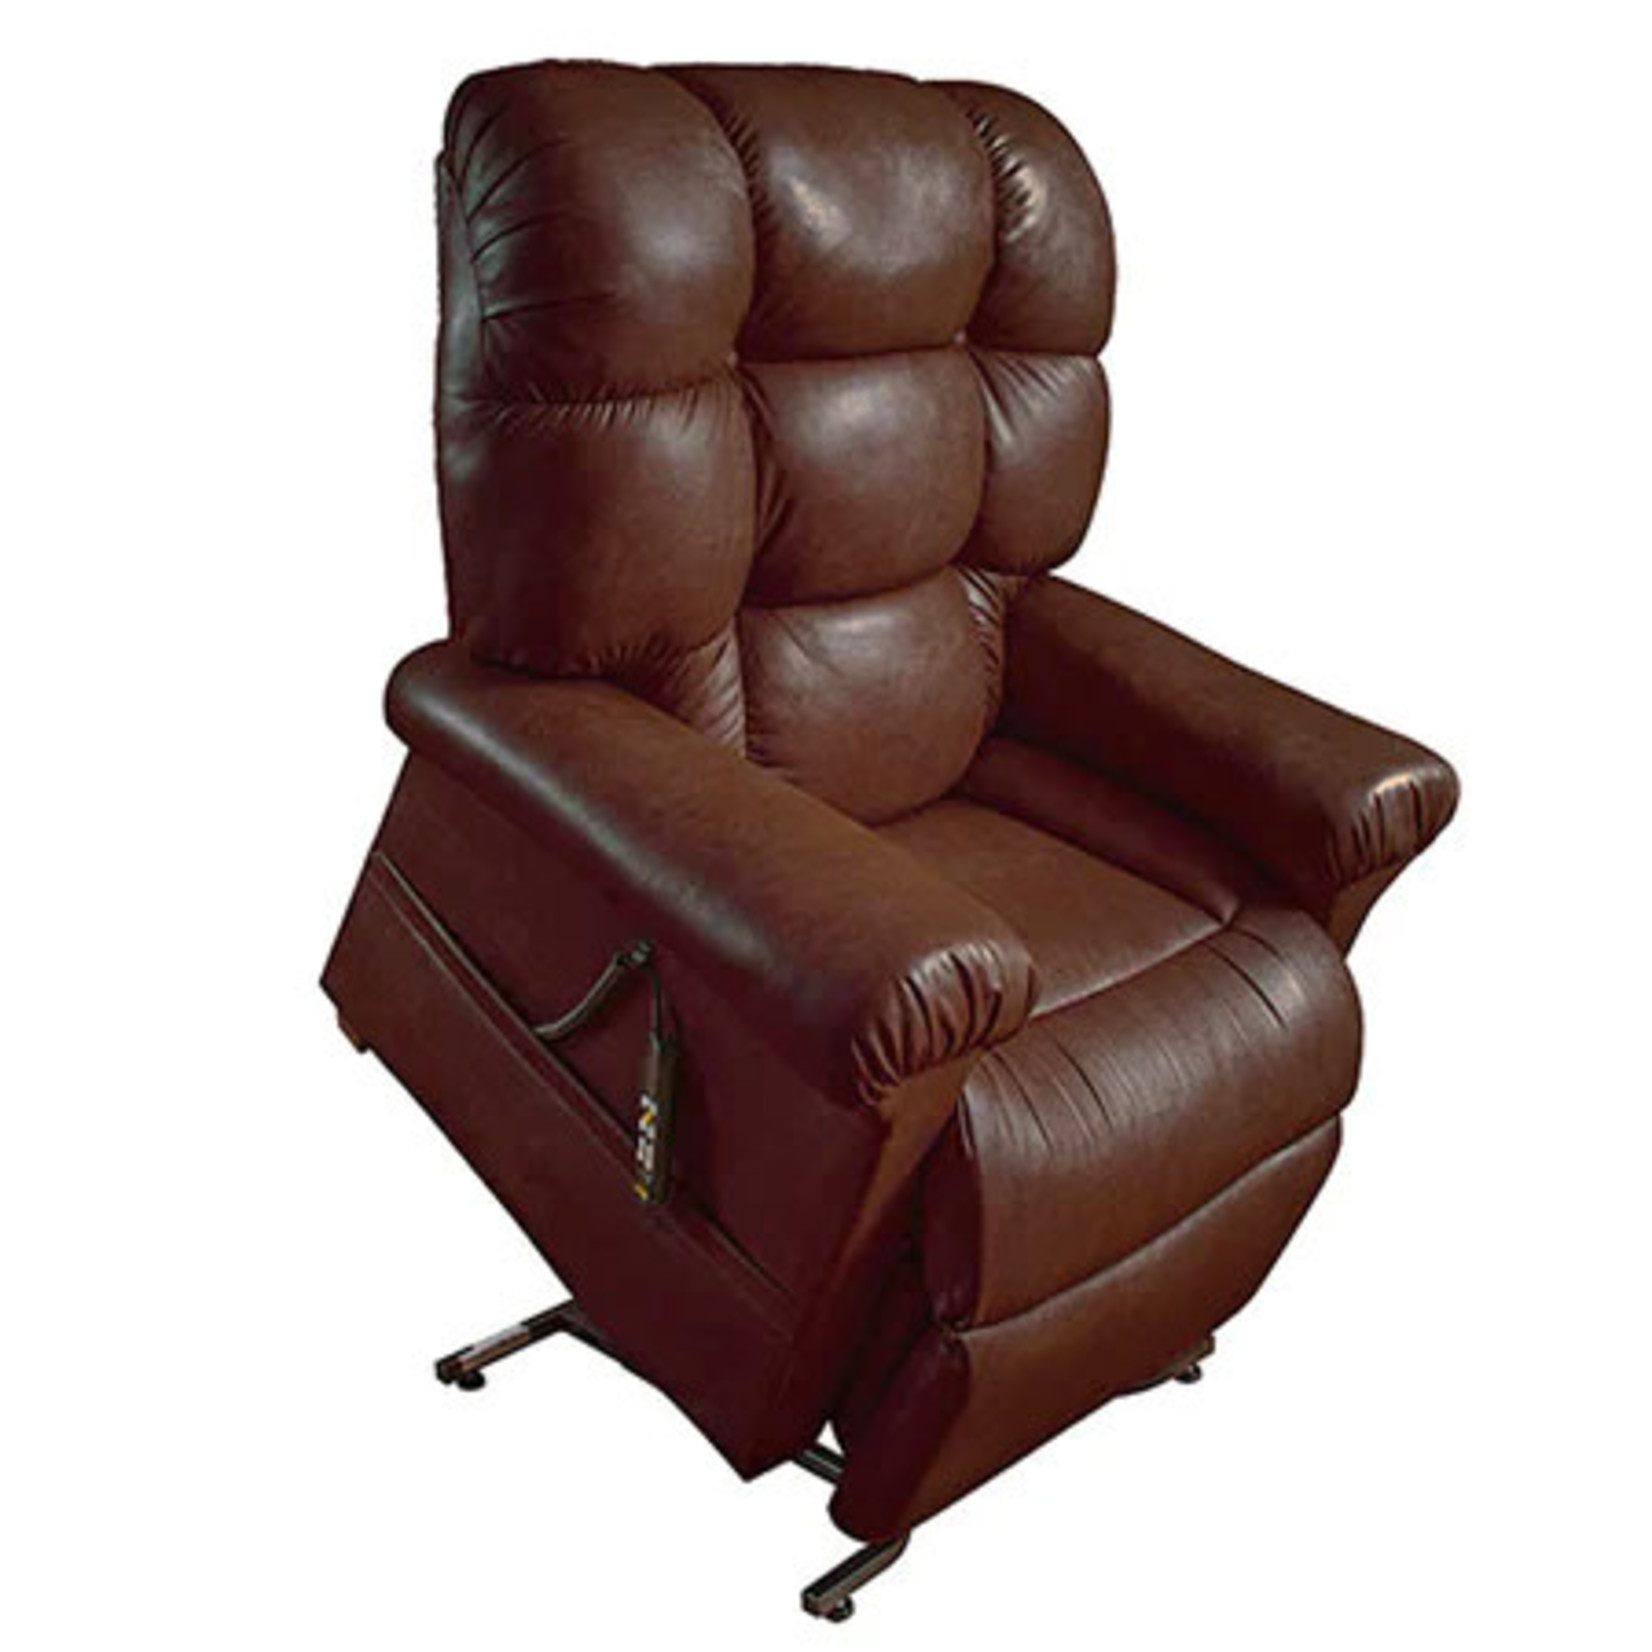 Journey Perfect Sleep Chair Deluxe 2-Zone Lift Recliner